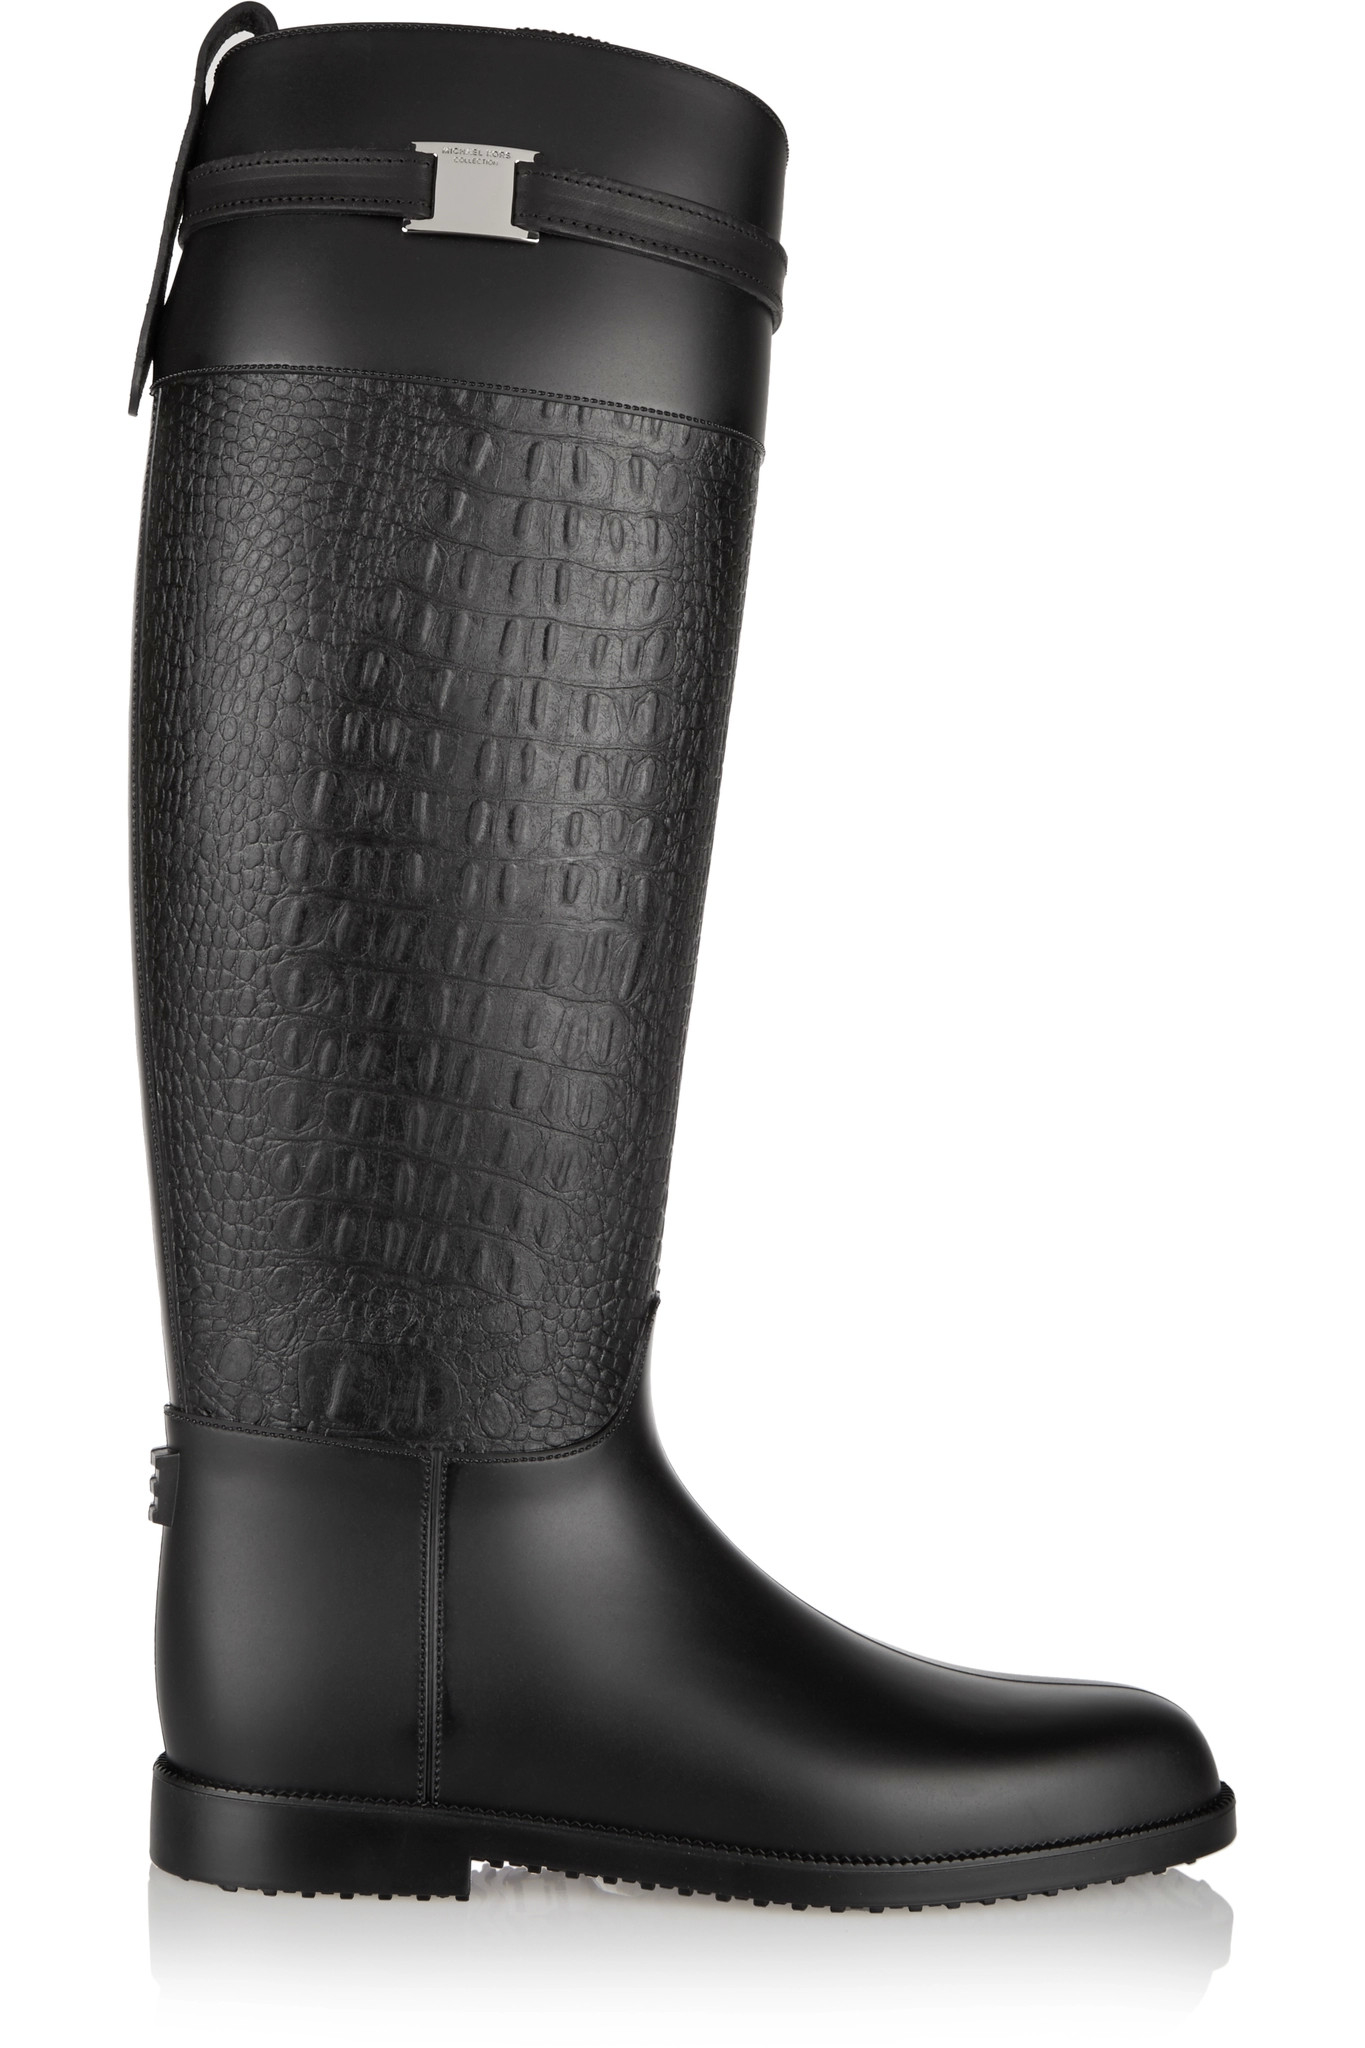 Michael Kors Miranda Croc-effect Rubber Rain Boots in Black - Lyst